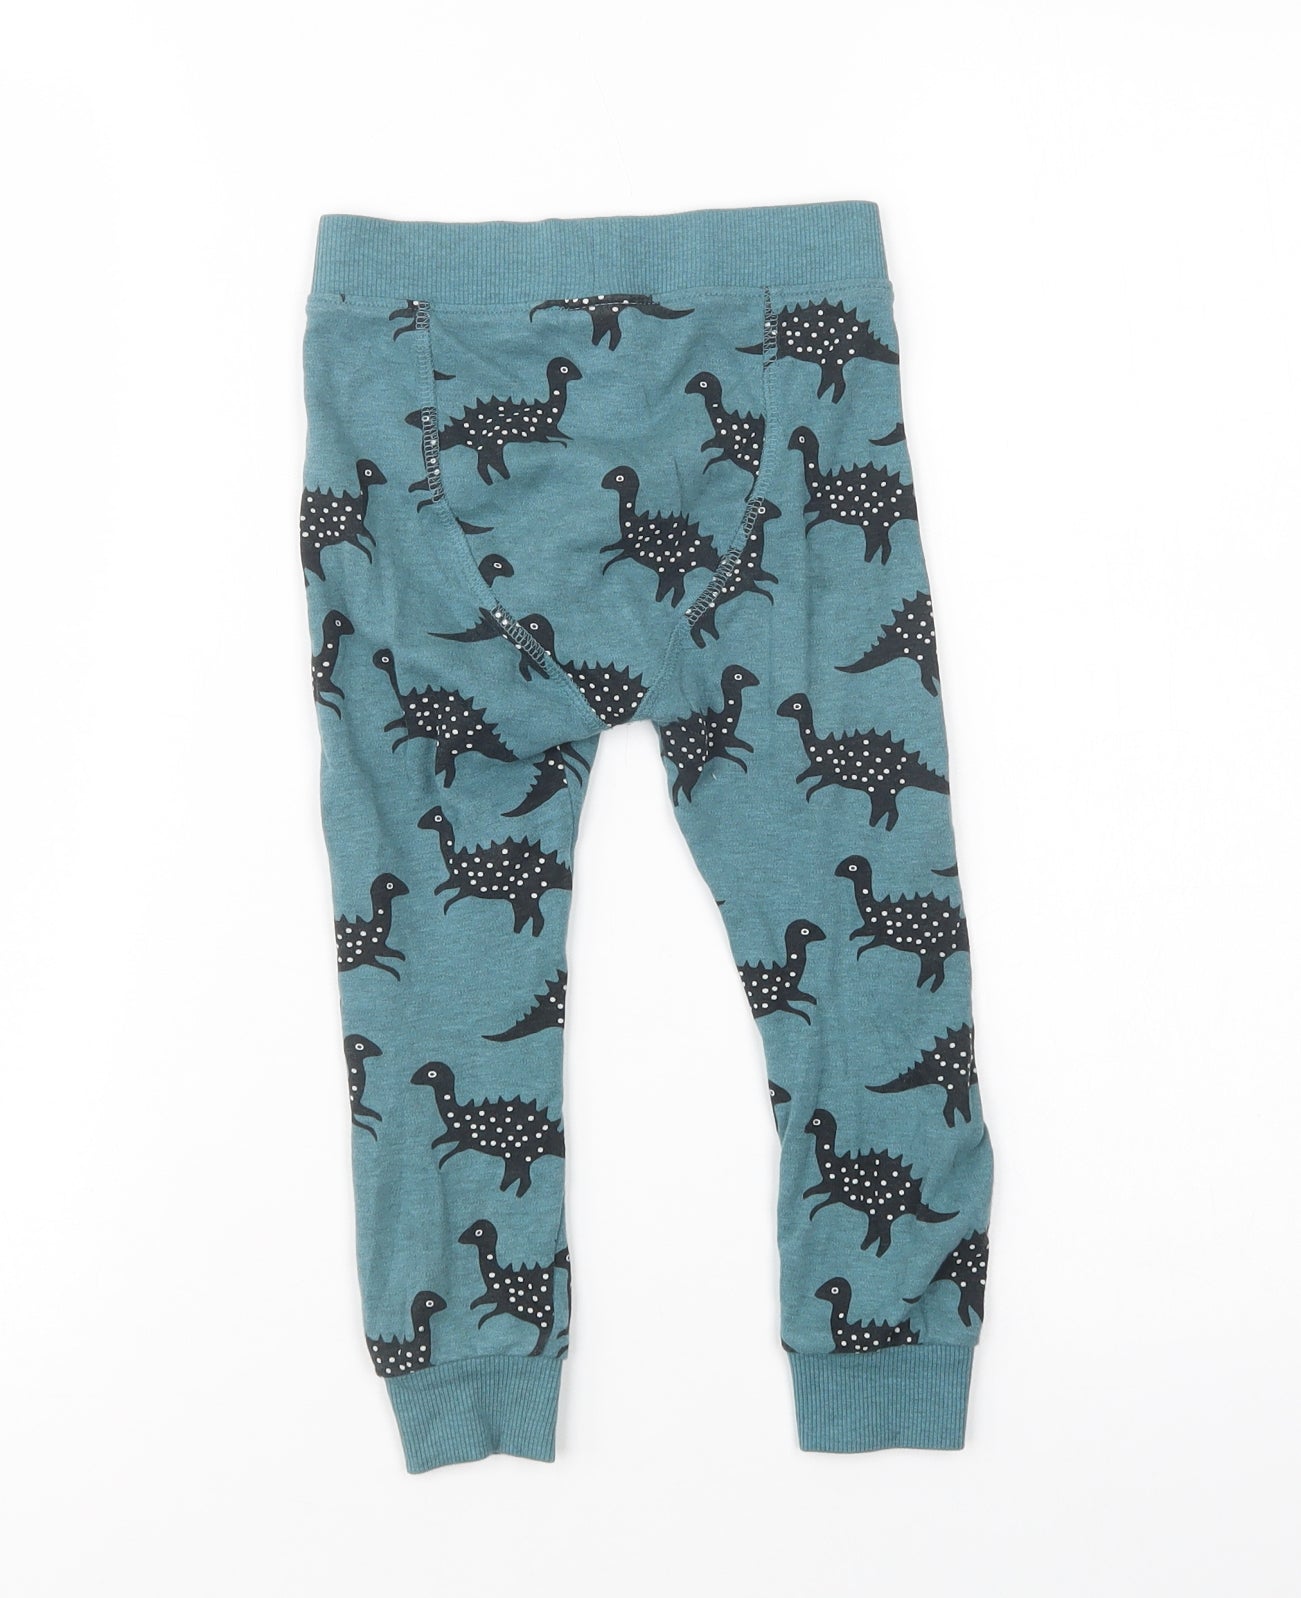 NEXT Boys Green Geometric Cotton  Pyjama Pants Size 3-4 Years   - Dinosaur Print